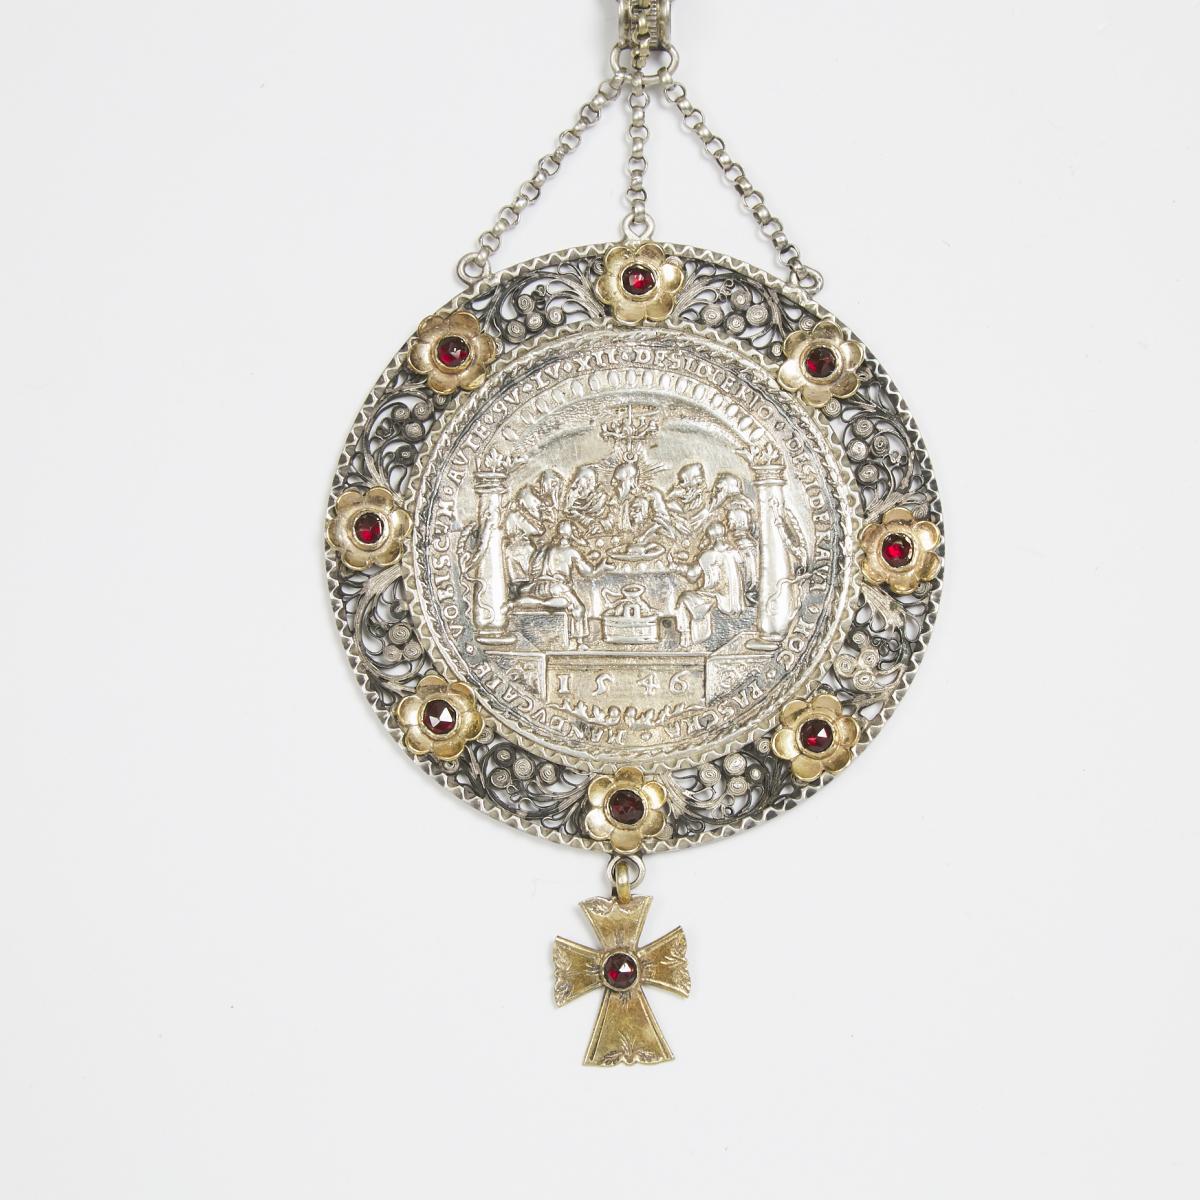 Bohemian Silver Medal, Nickel Milicz, 1546, medallion diameter 2.1 in — 5.42 cm - Image 2 of 5